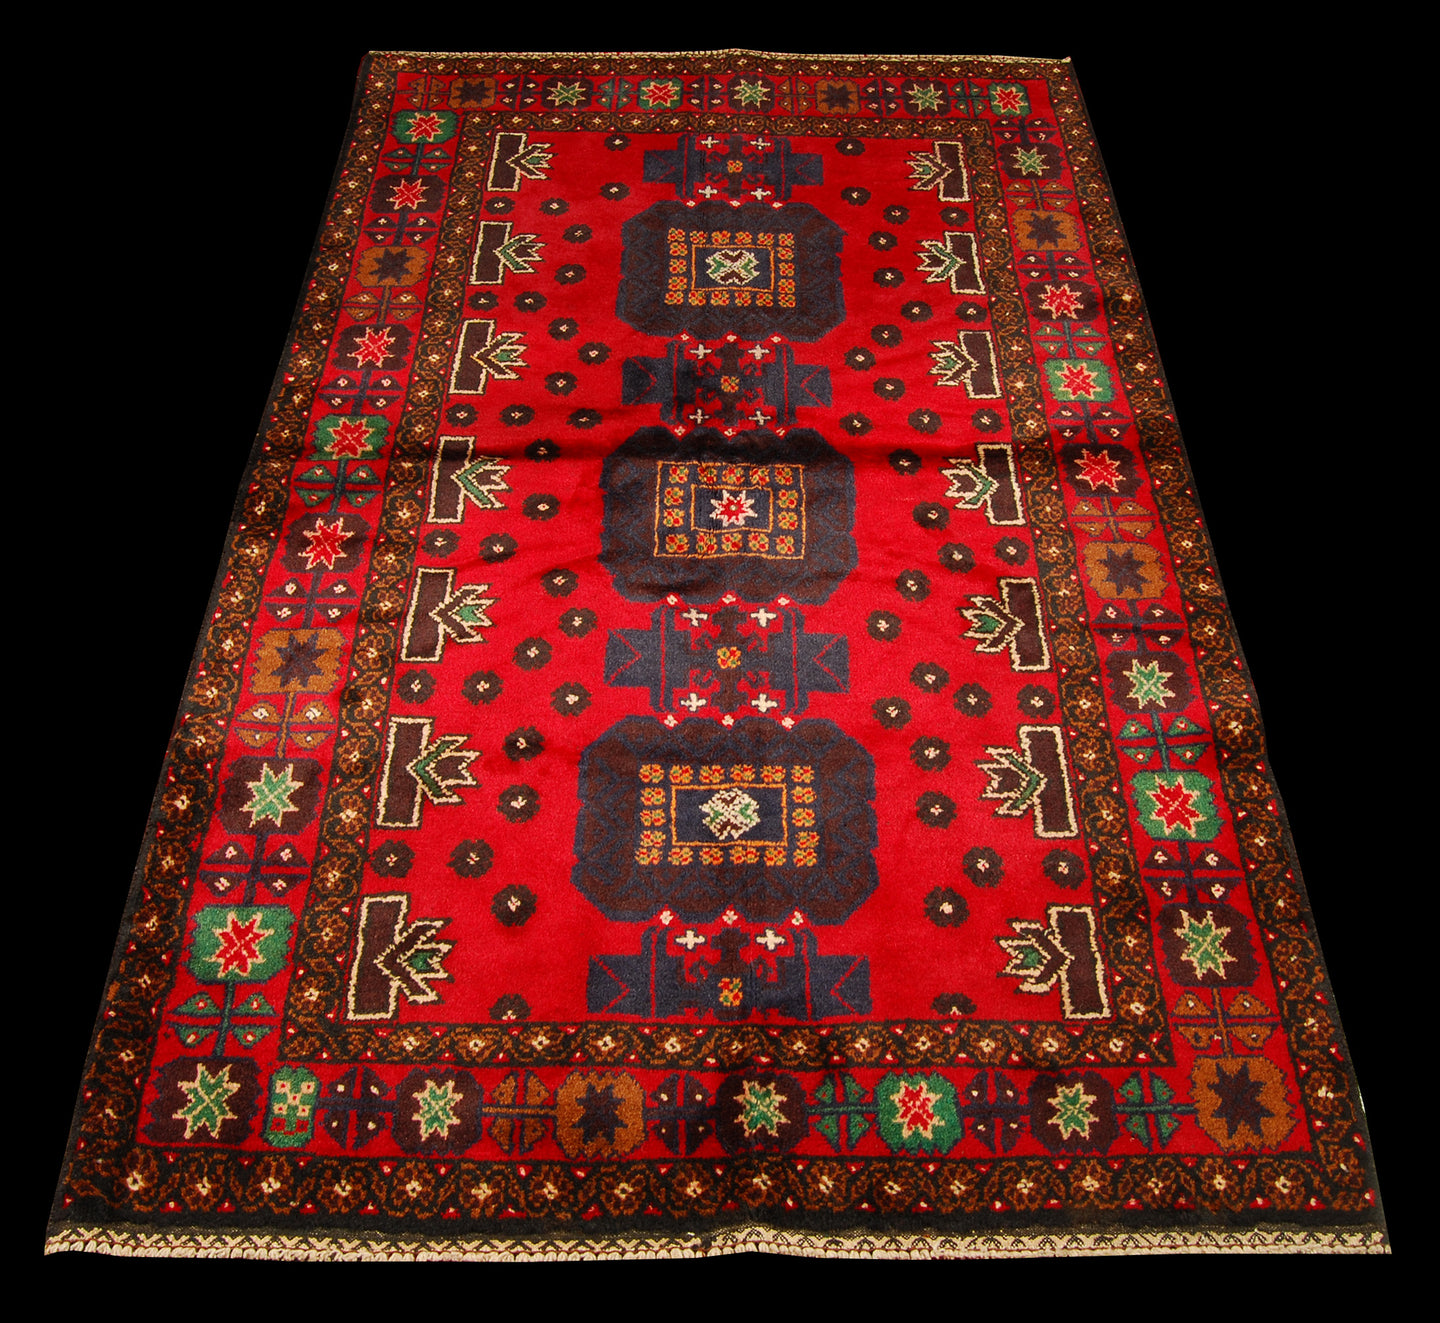 Genuine, Original Pure Wool Rug Rustic Handmad Carpet CM 185x109